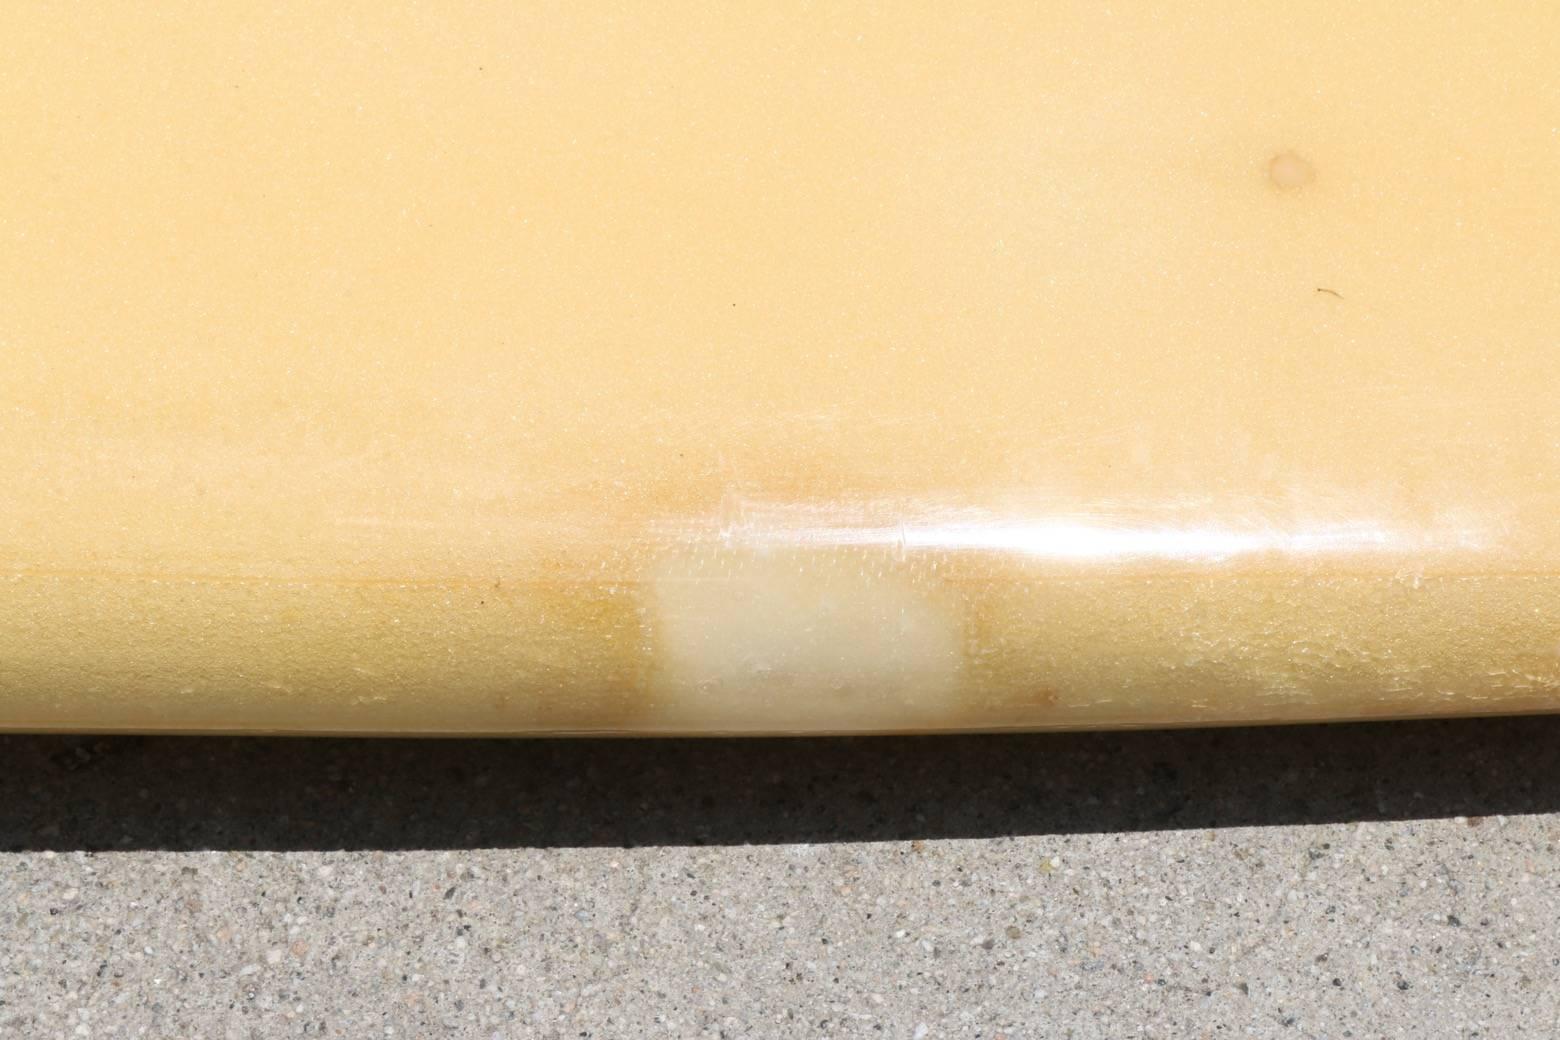 Fiberglass Duke Kahanamoku 1960s Surfboard, All Original Condition, Rare For Sale